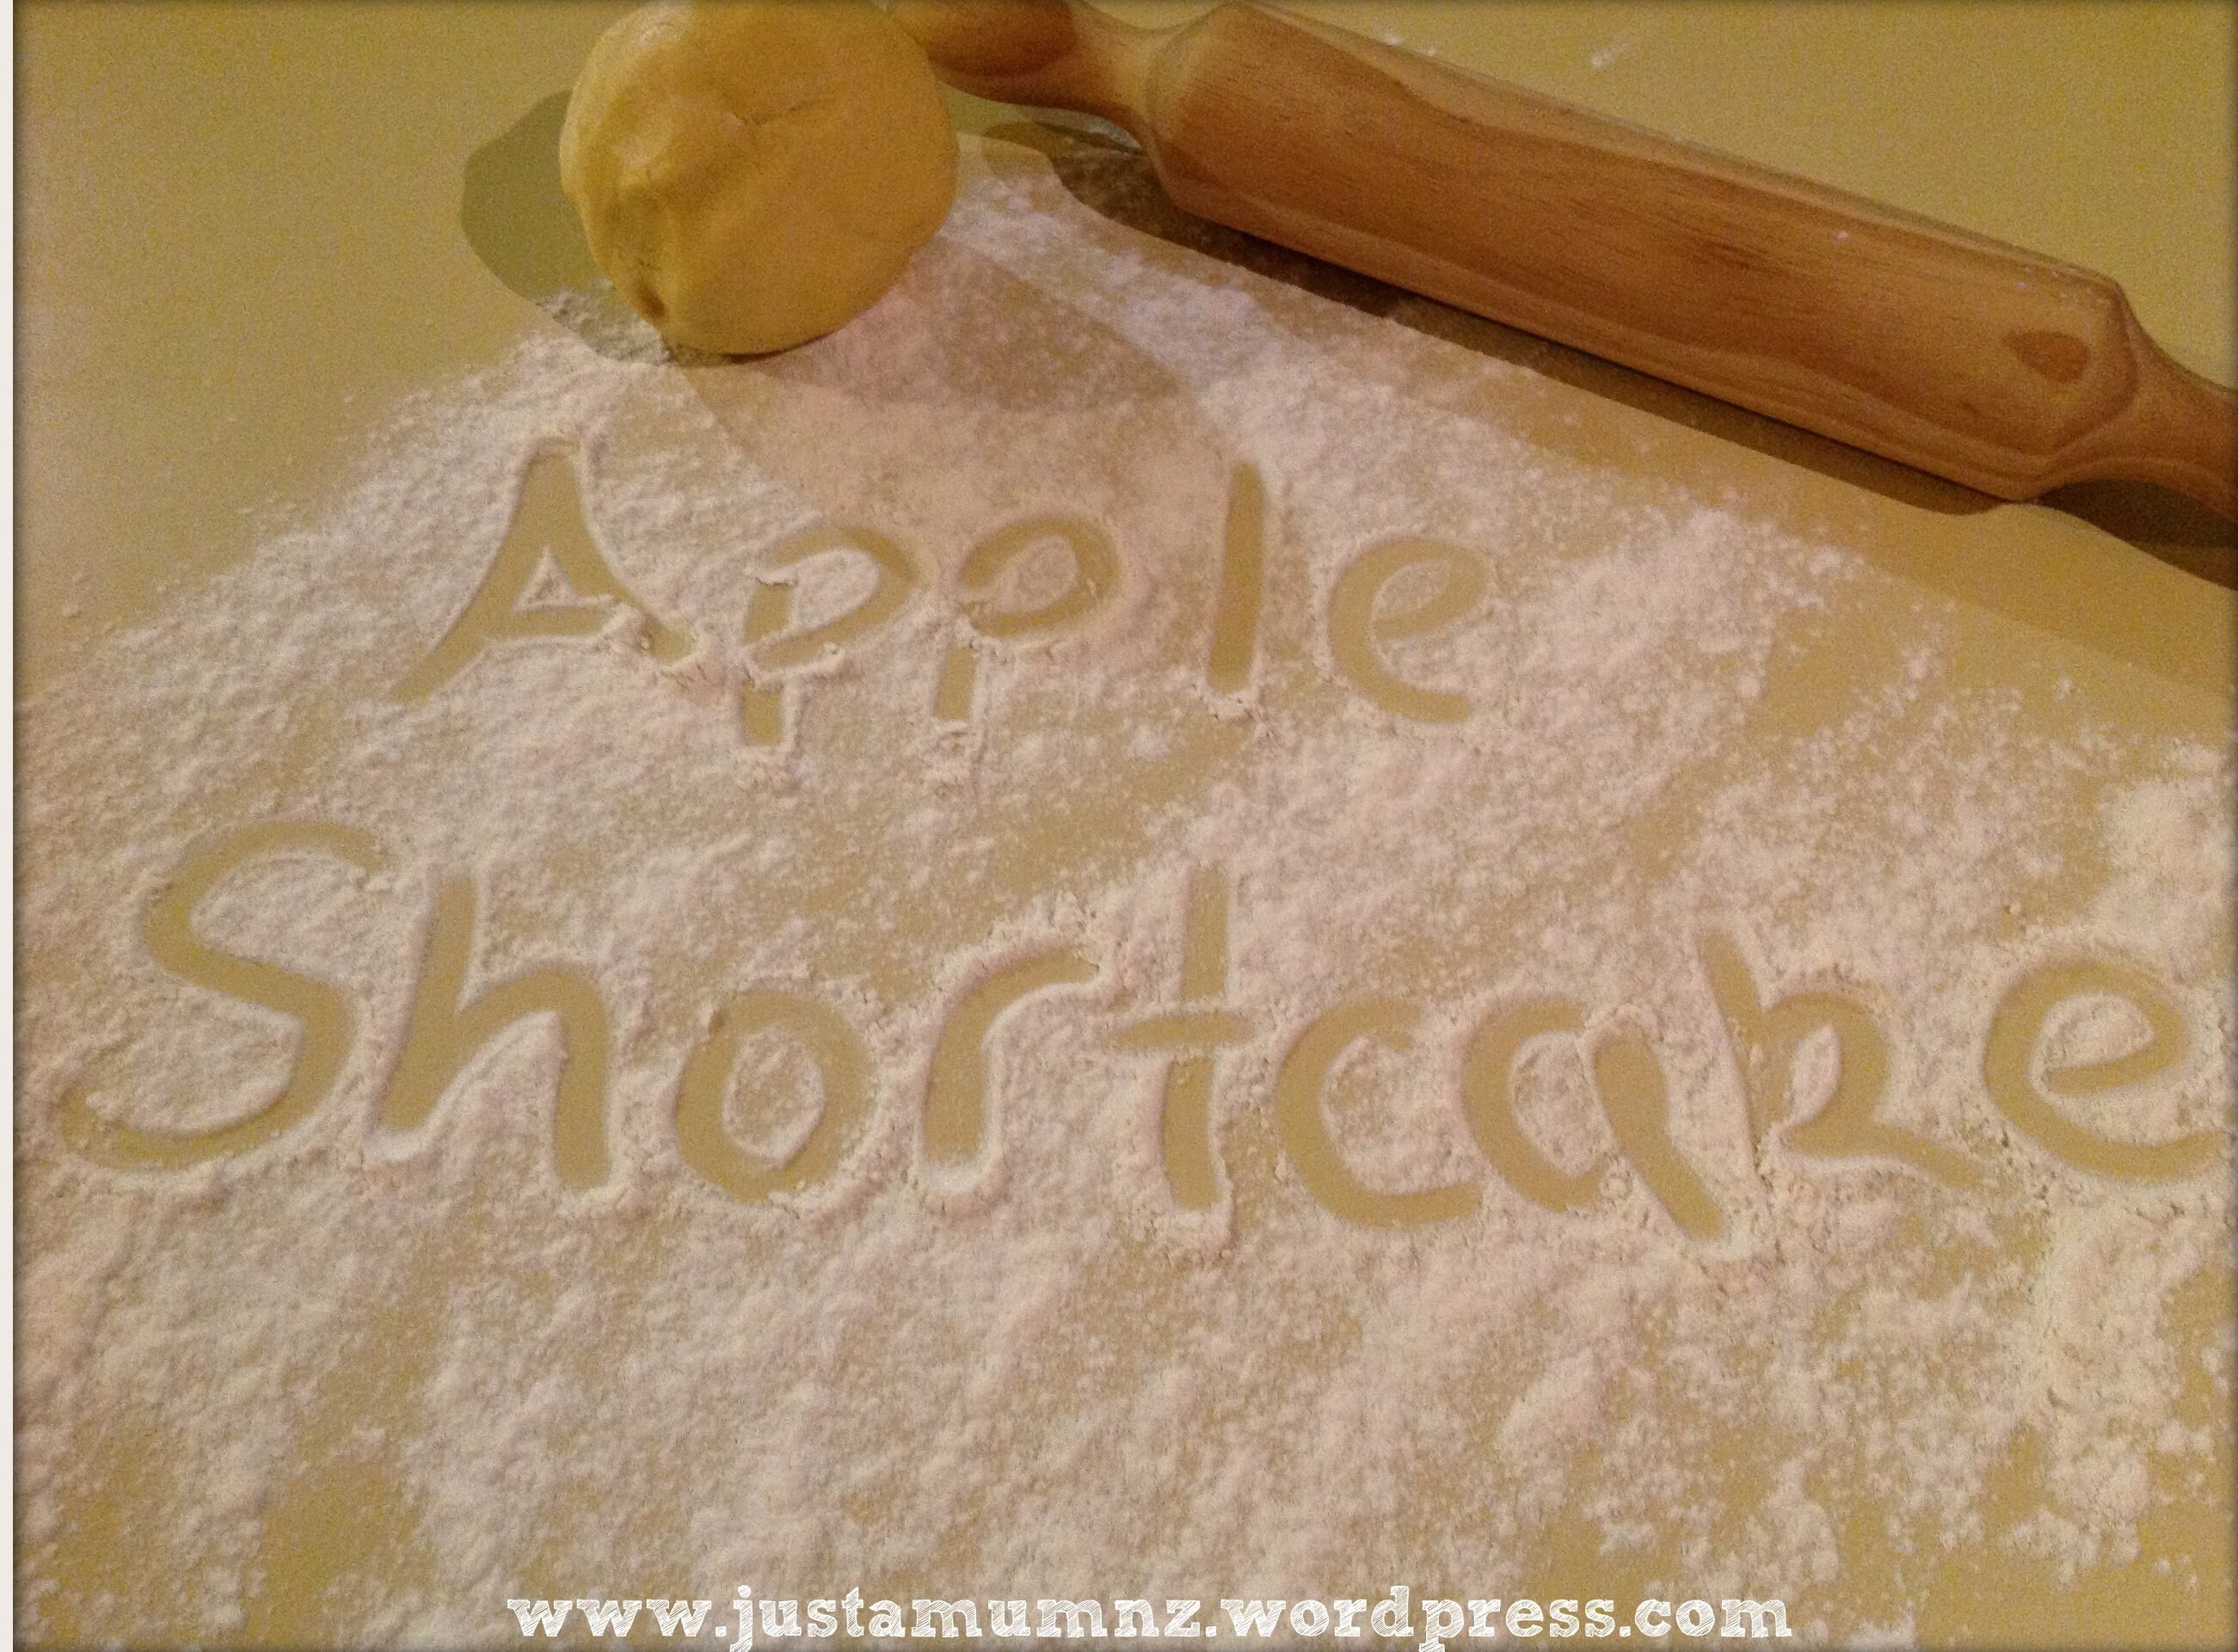 Words Apple Shortcake written in flour on the bench